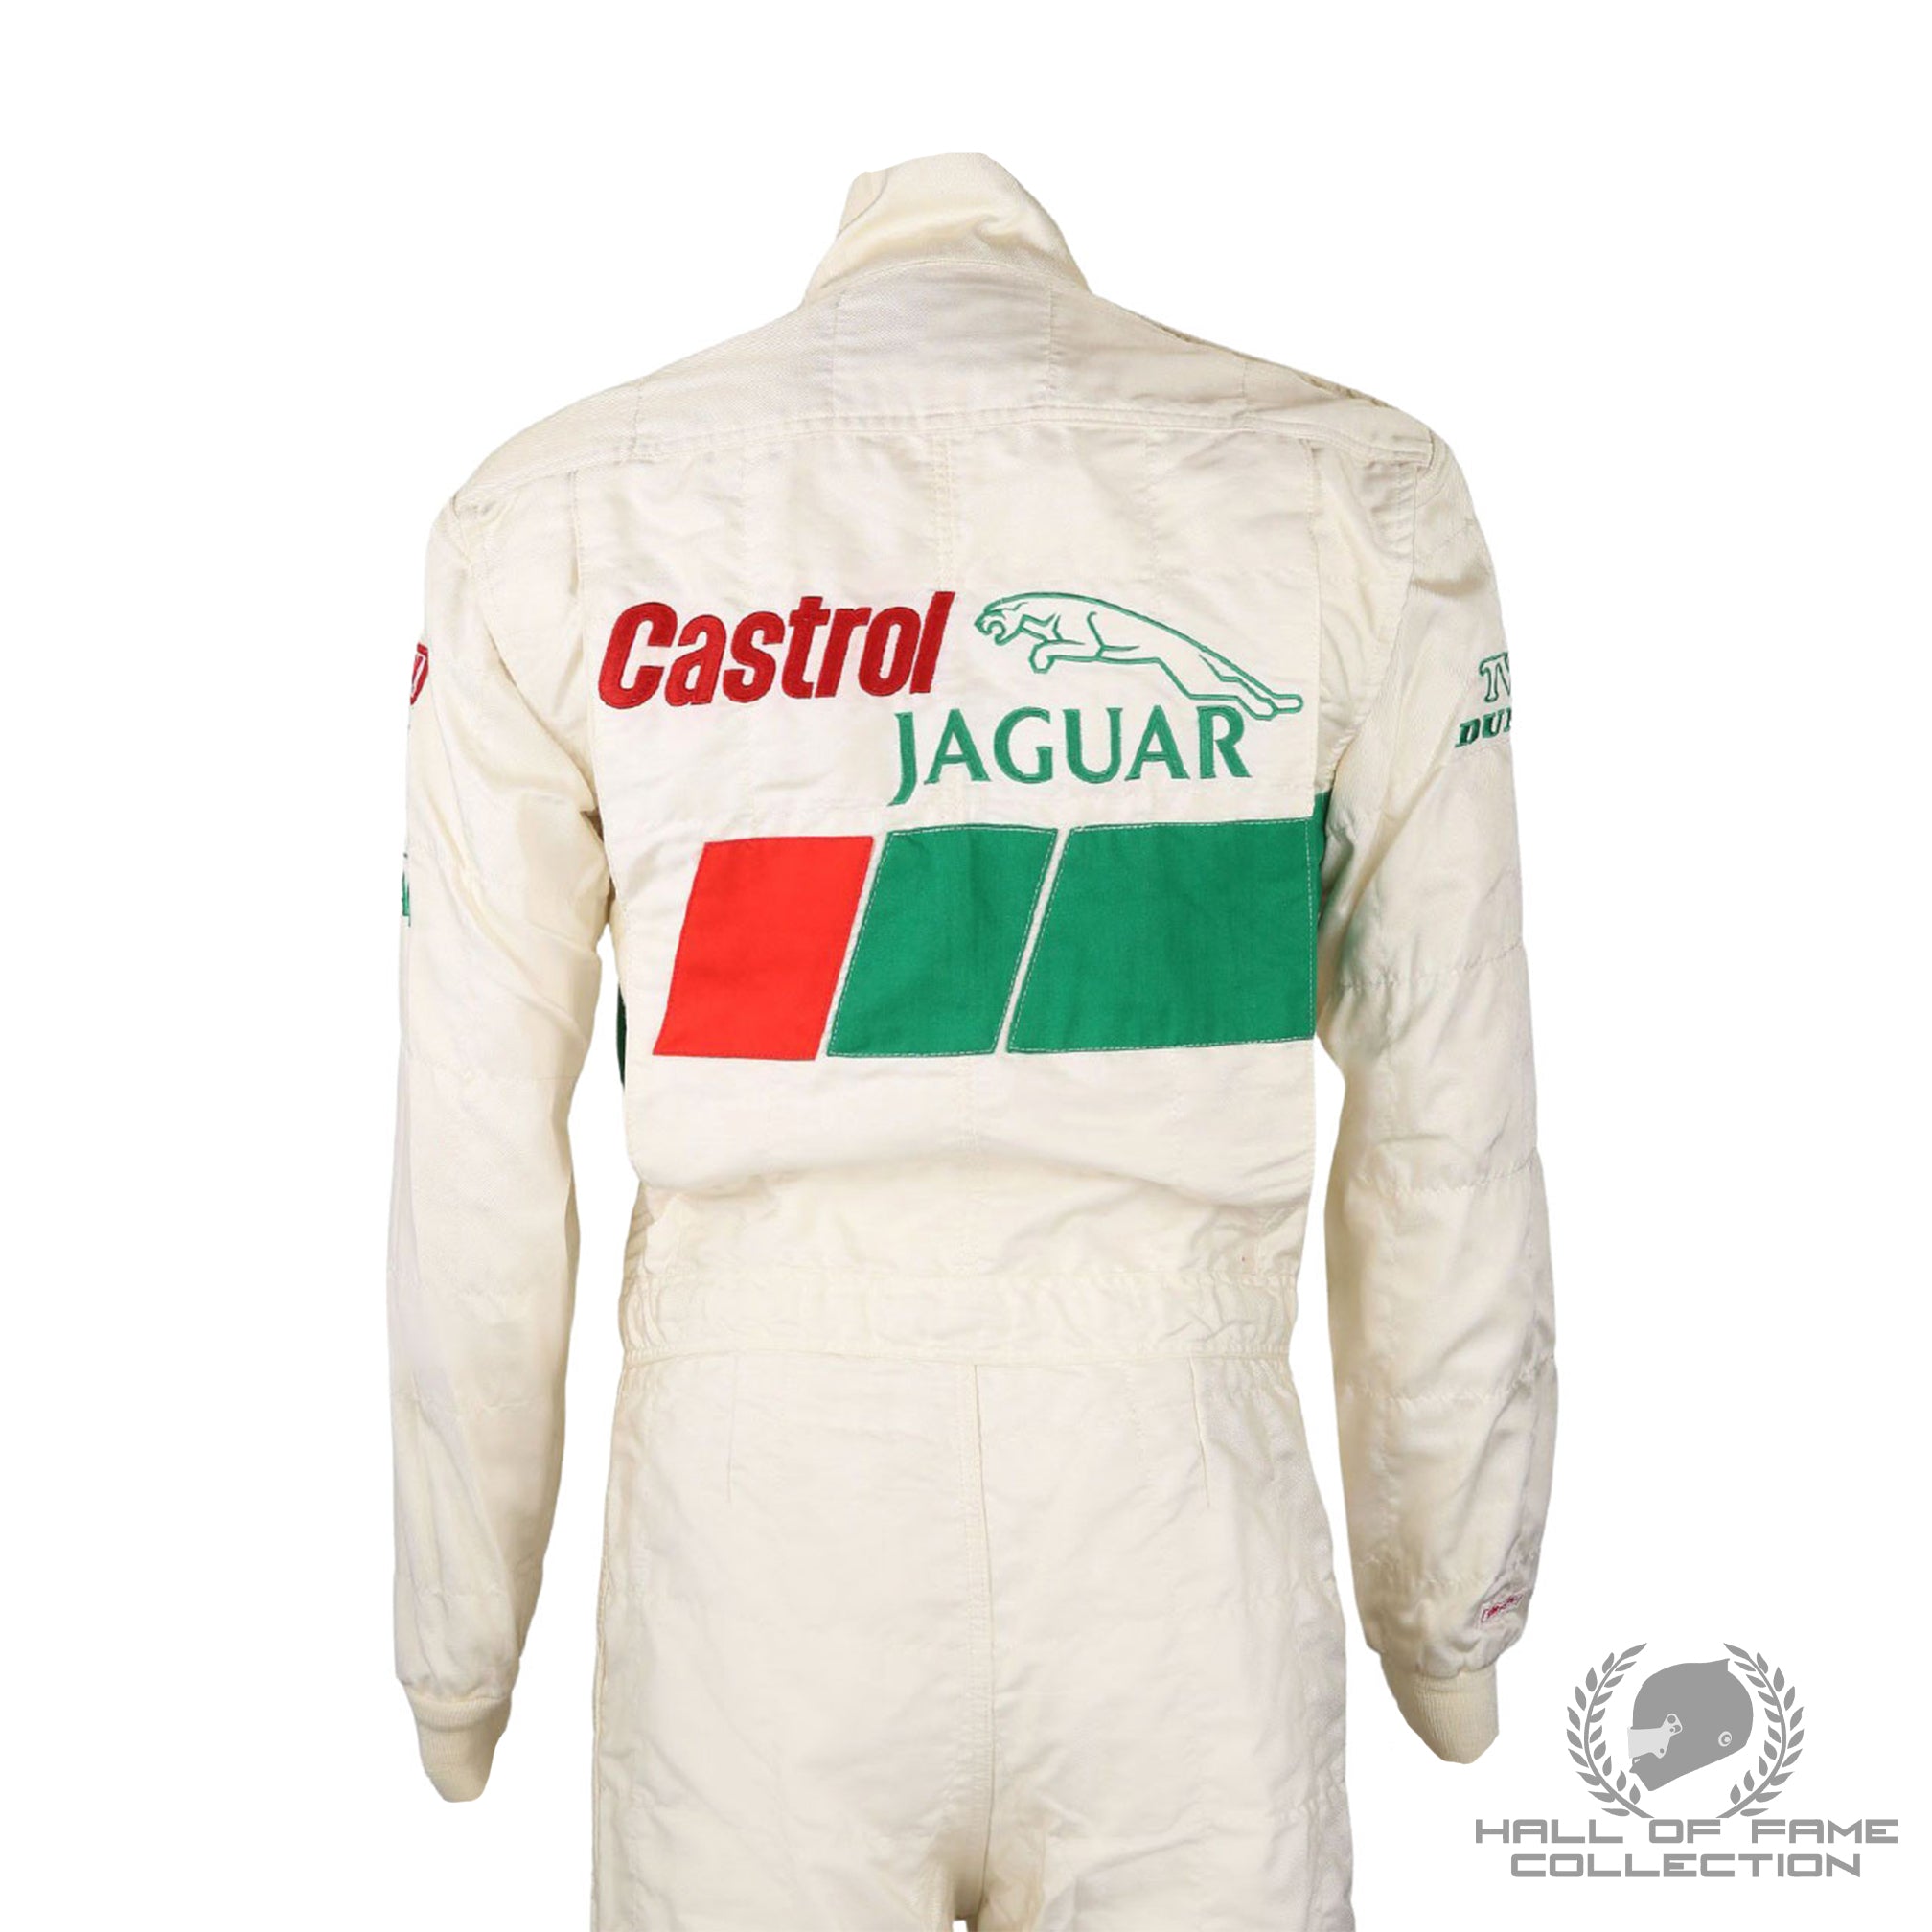 1989 Derek Daly Signed Daytona 24 hrs Race Used Castrol Jaguar Racing Sportscar Suit